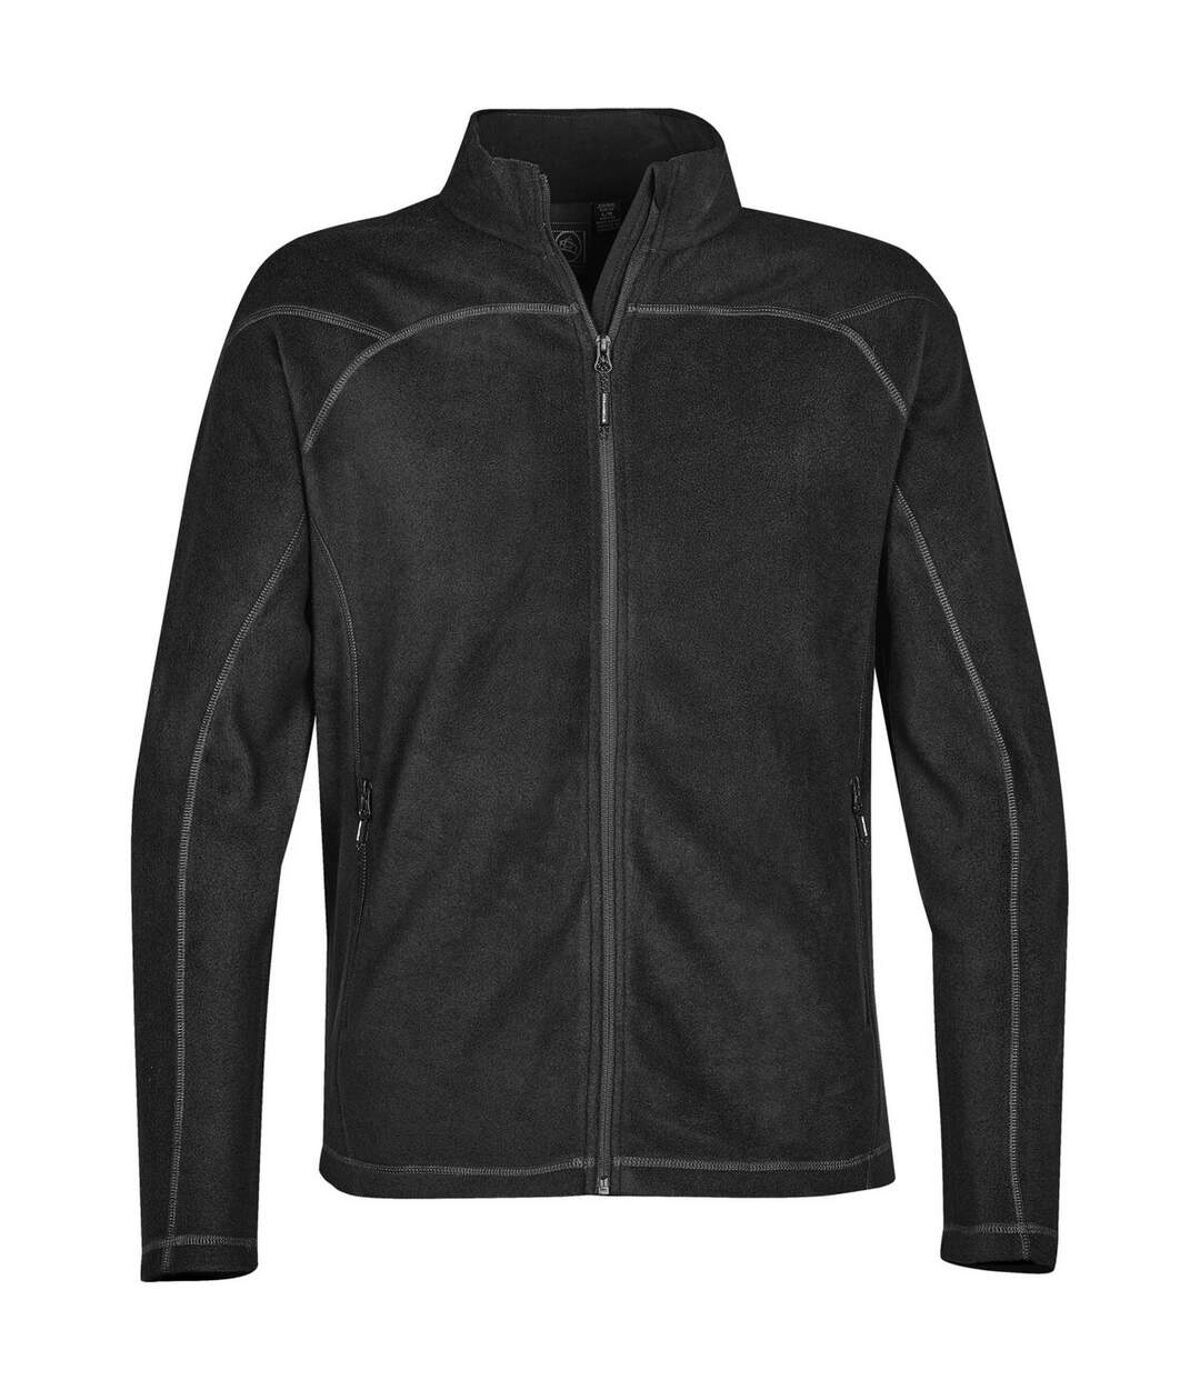 Stormtech Mens Reactor Fleece Shell Jacket (Black) - UTBC3889